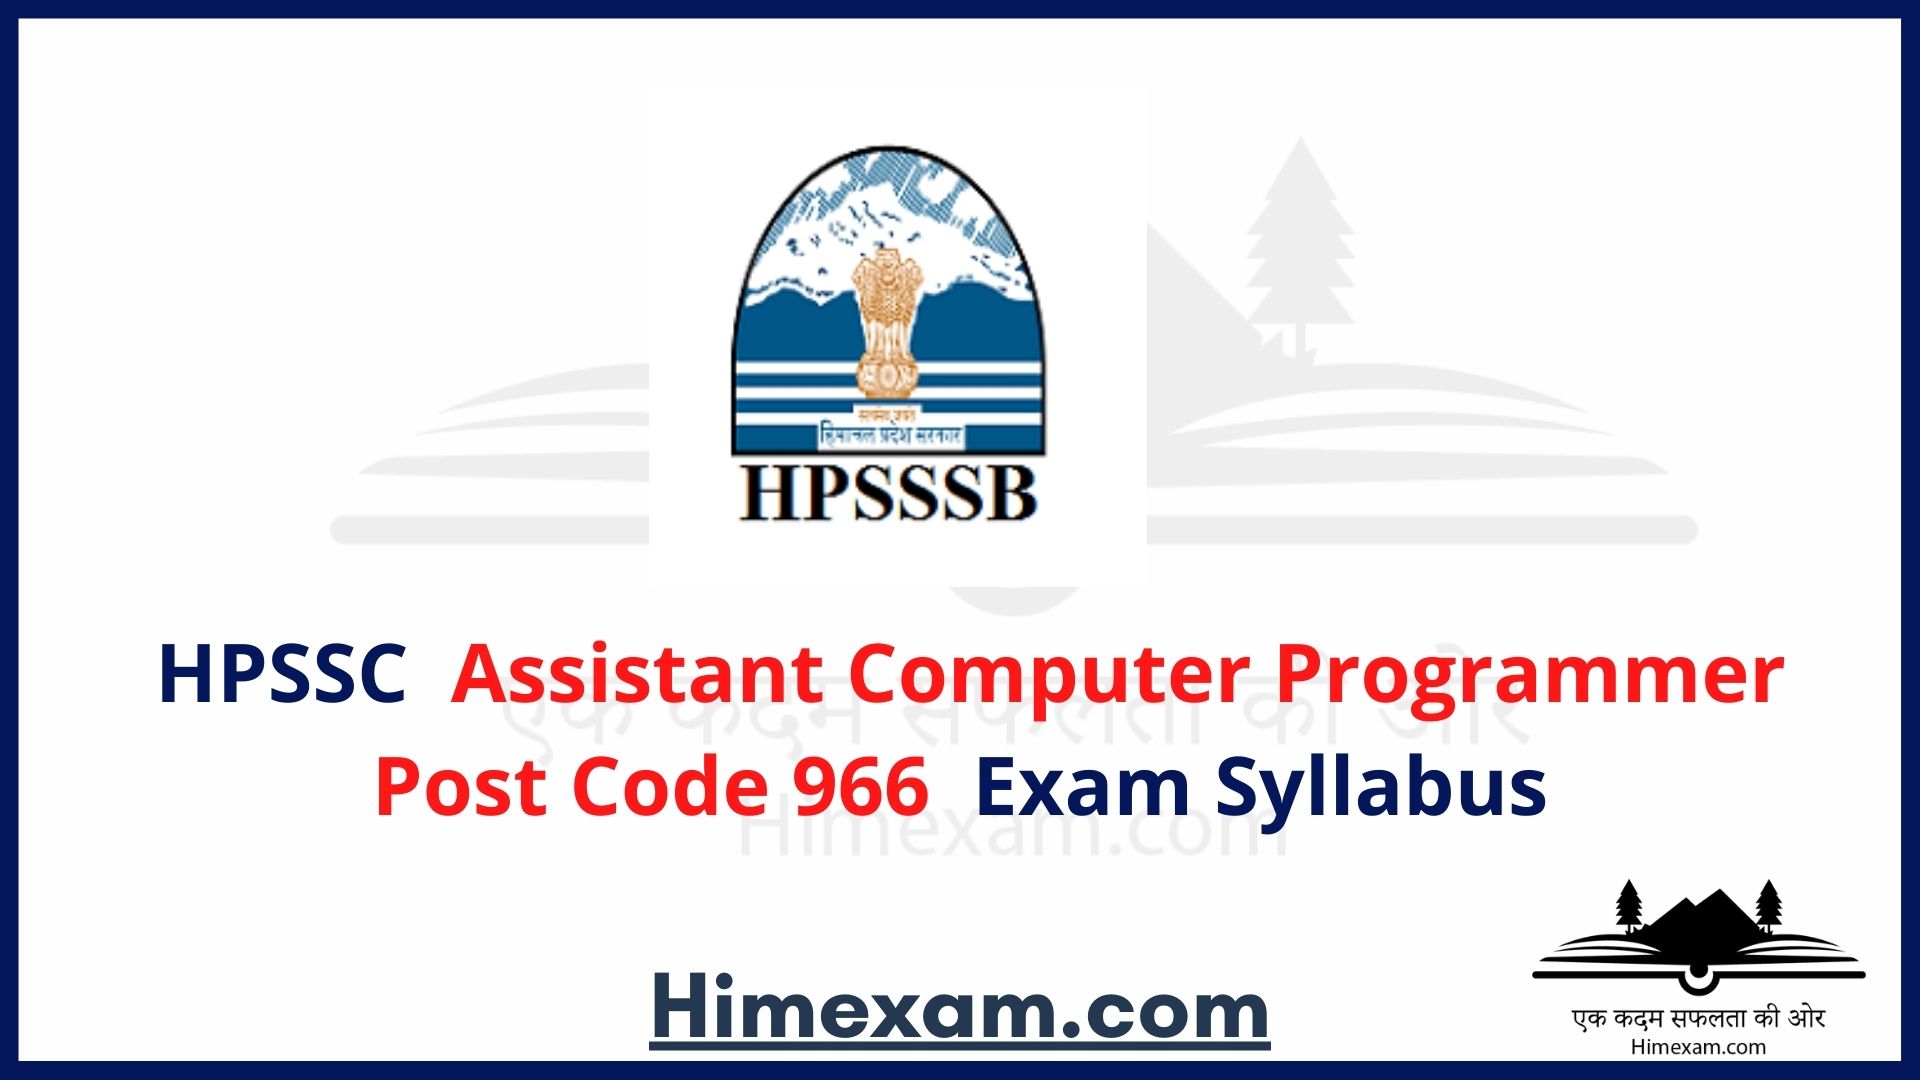 HPSSC Assistant Computer Programmer Post Code 966 Exam Syllabus